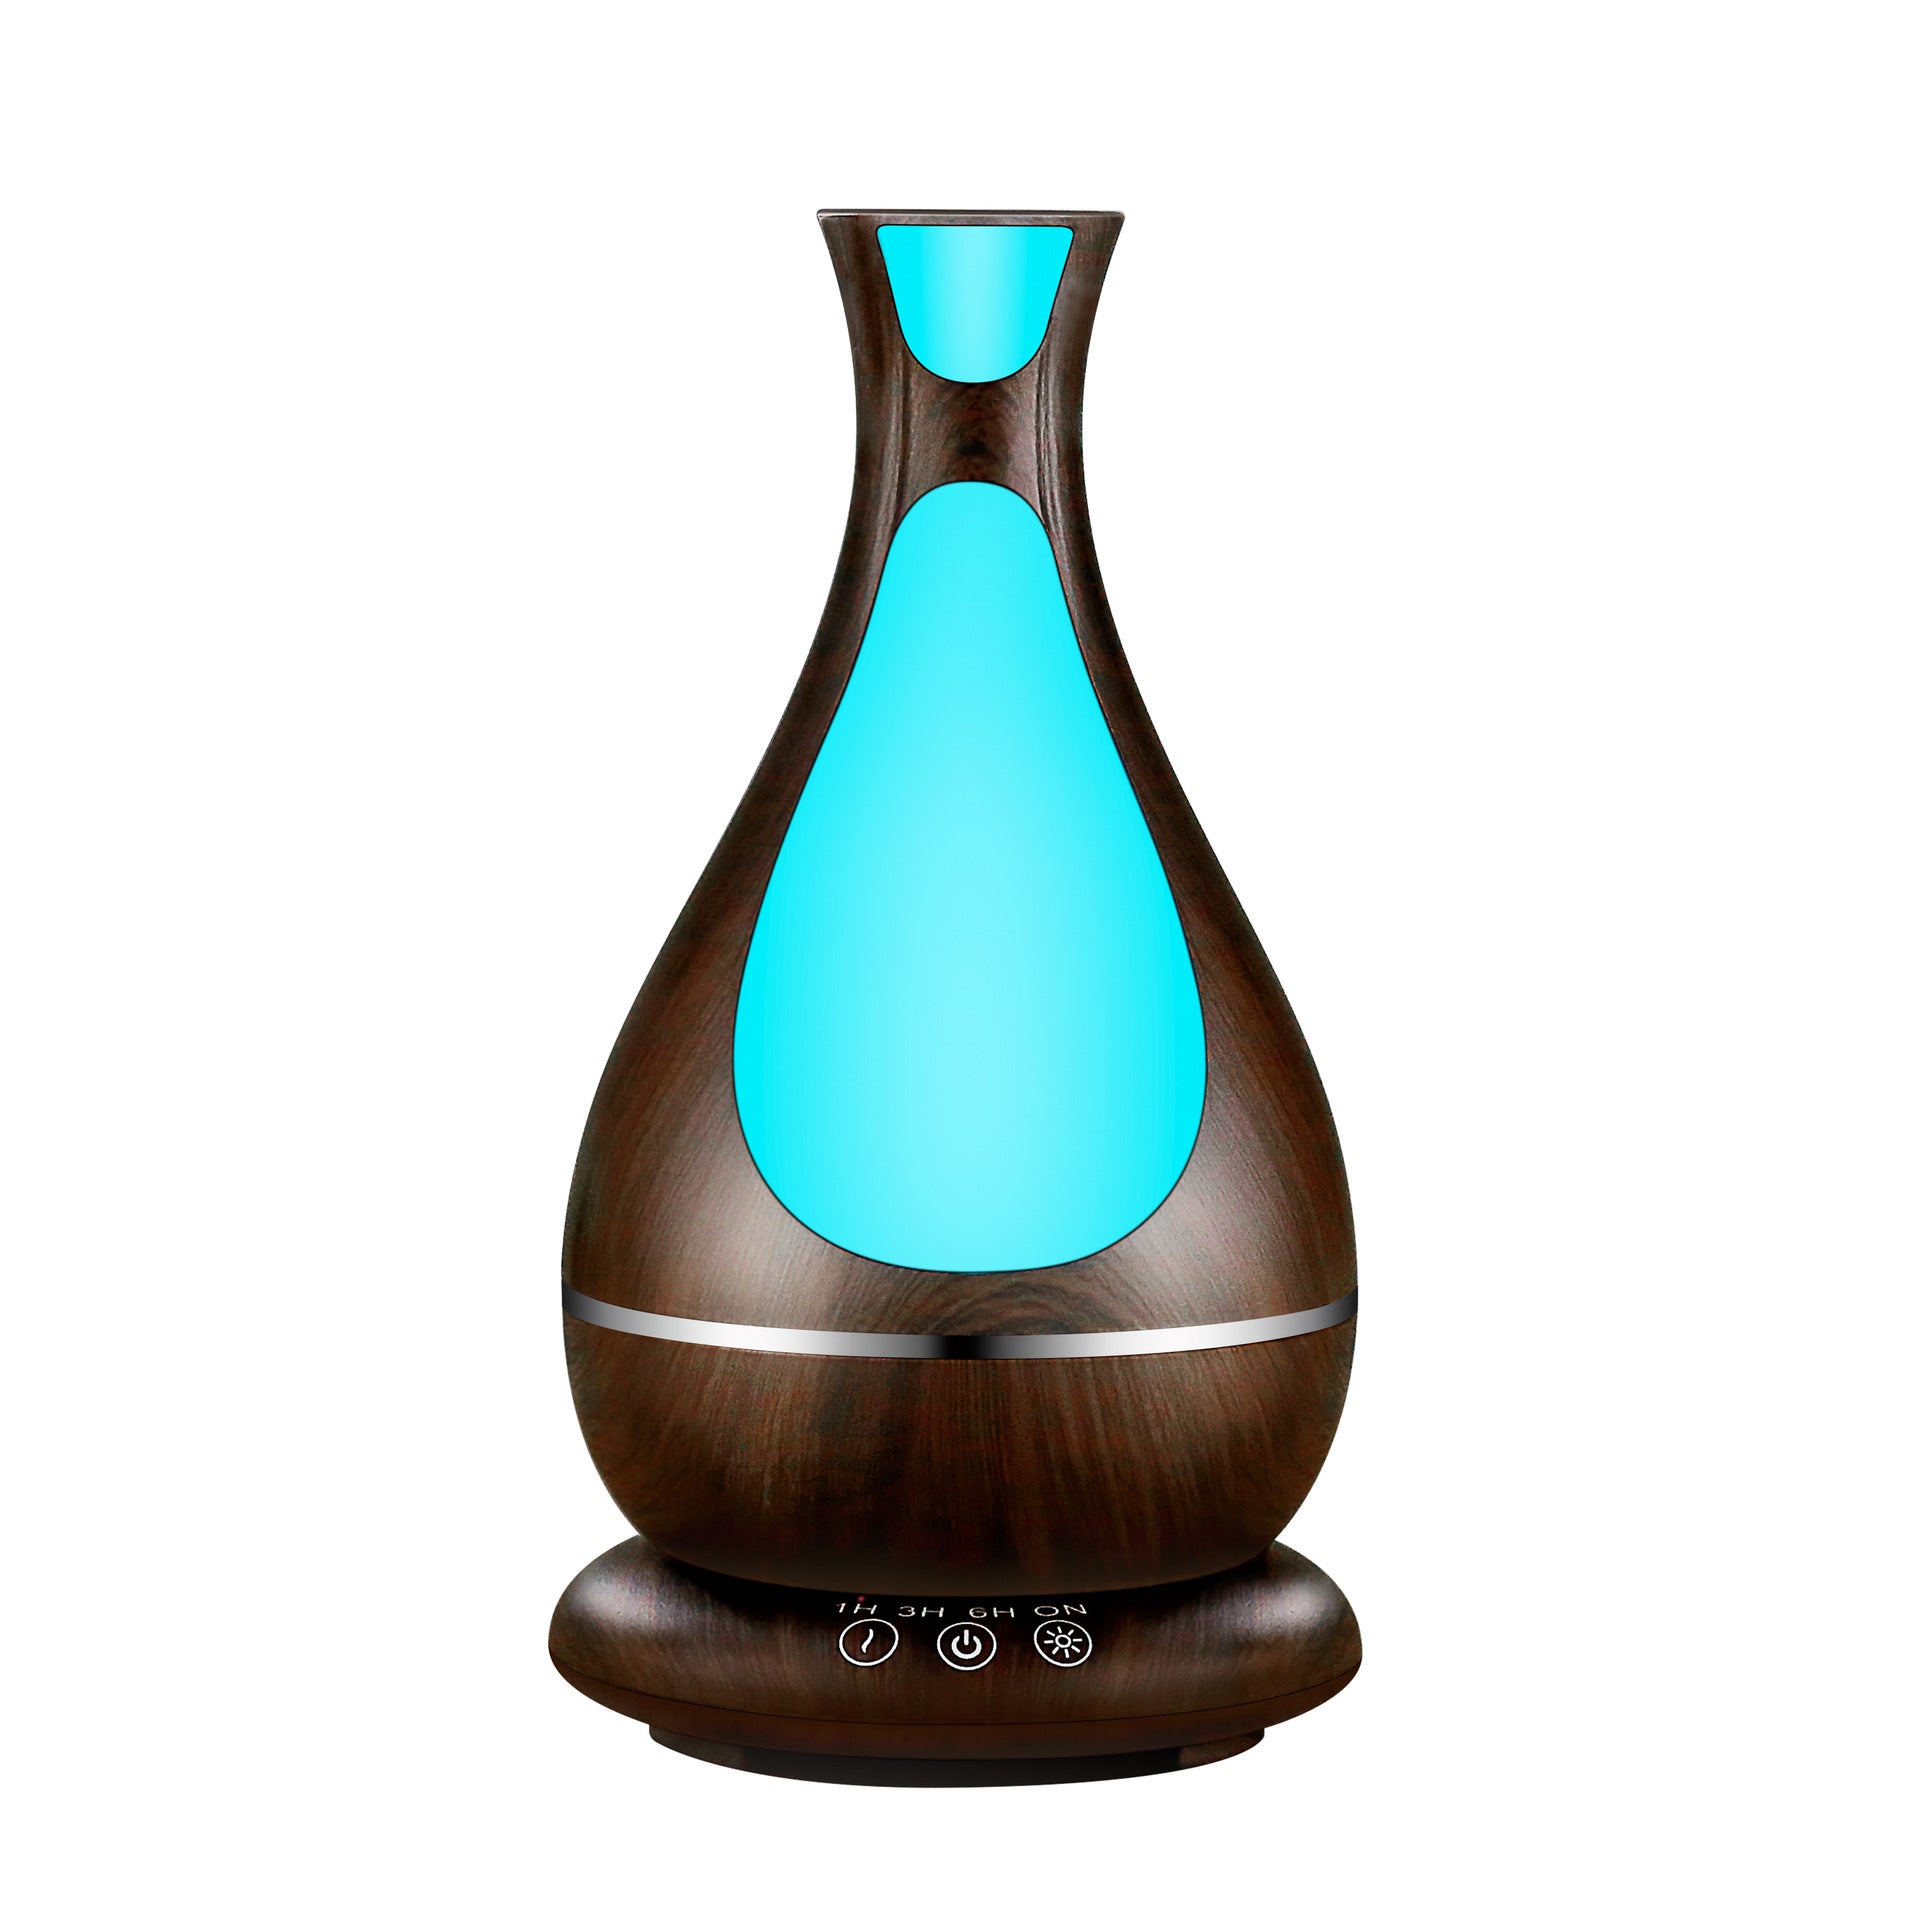 The "Elegant Chemist" lamp humidifier